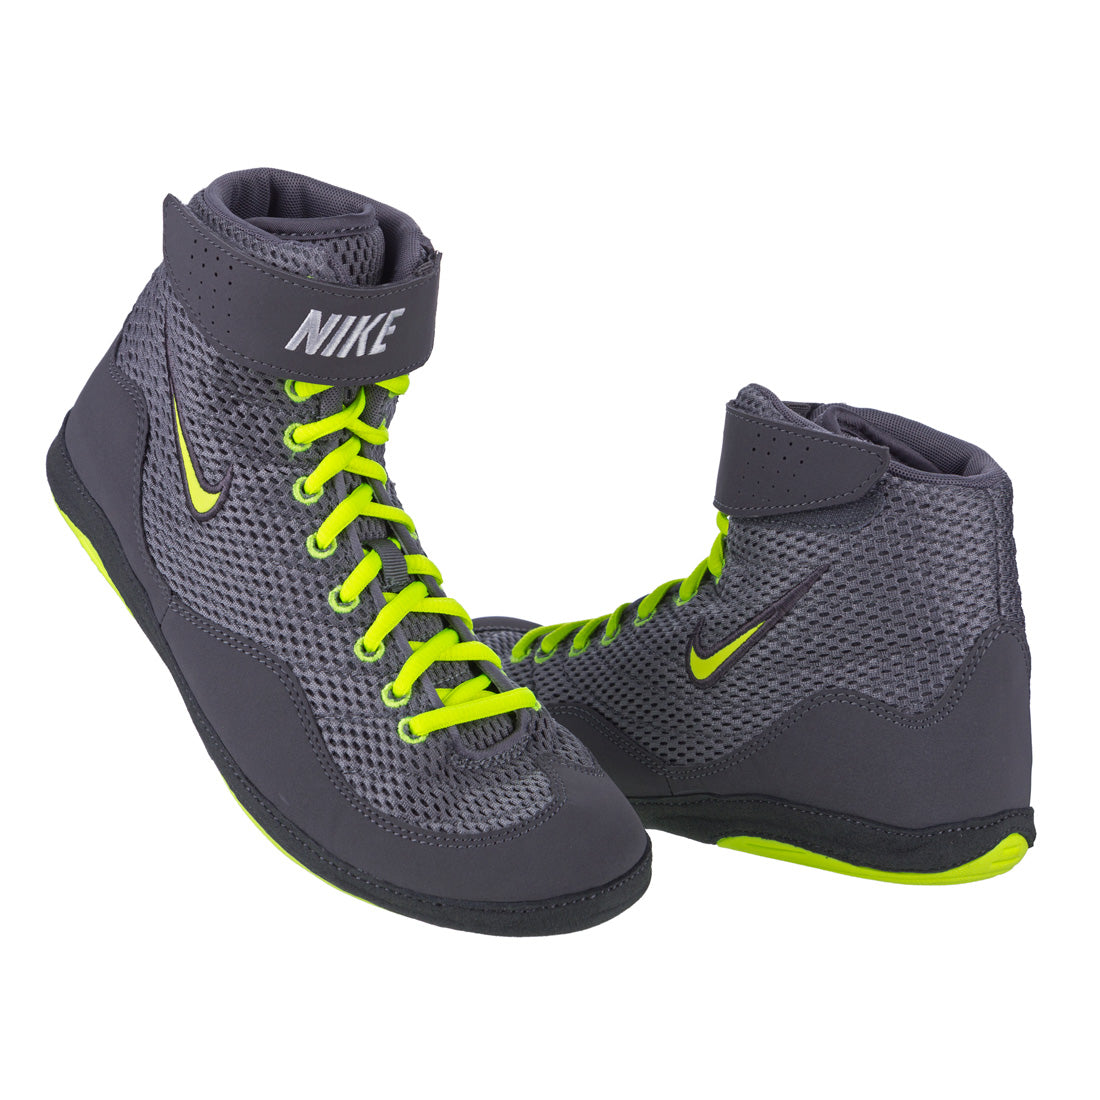 Nike Inflict Wrestlingschuhe - schwarz/neongrün, 325256007